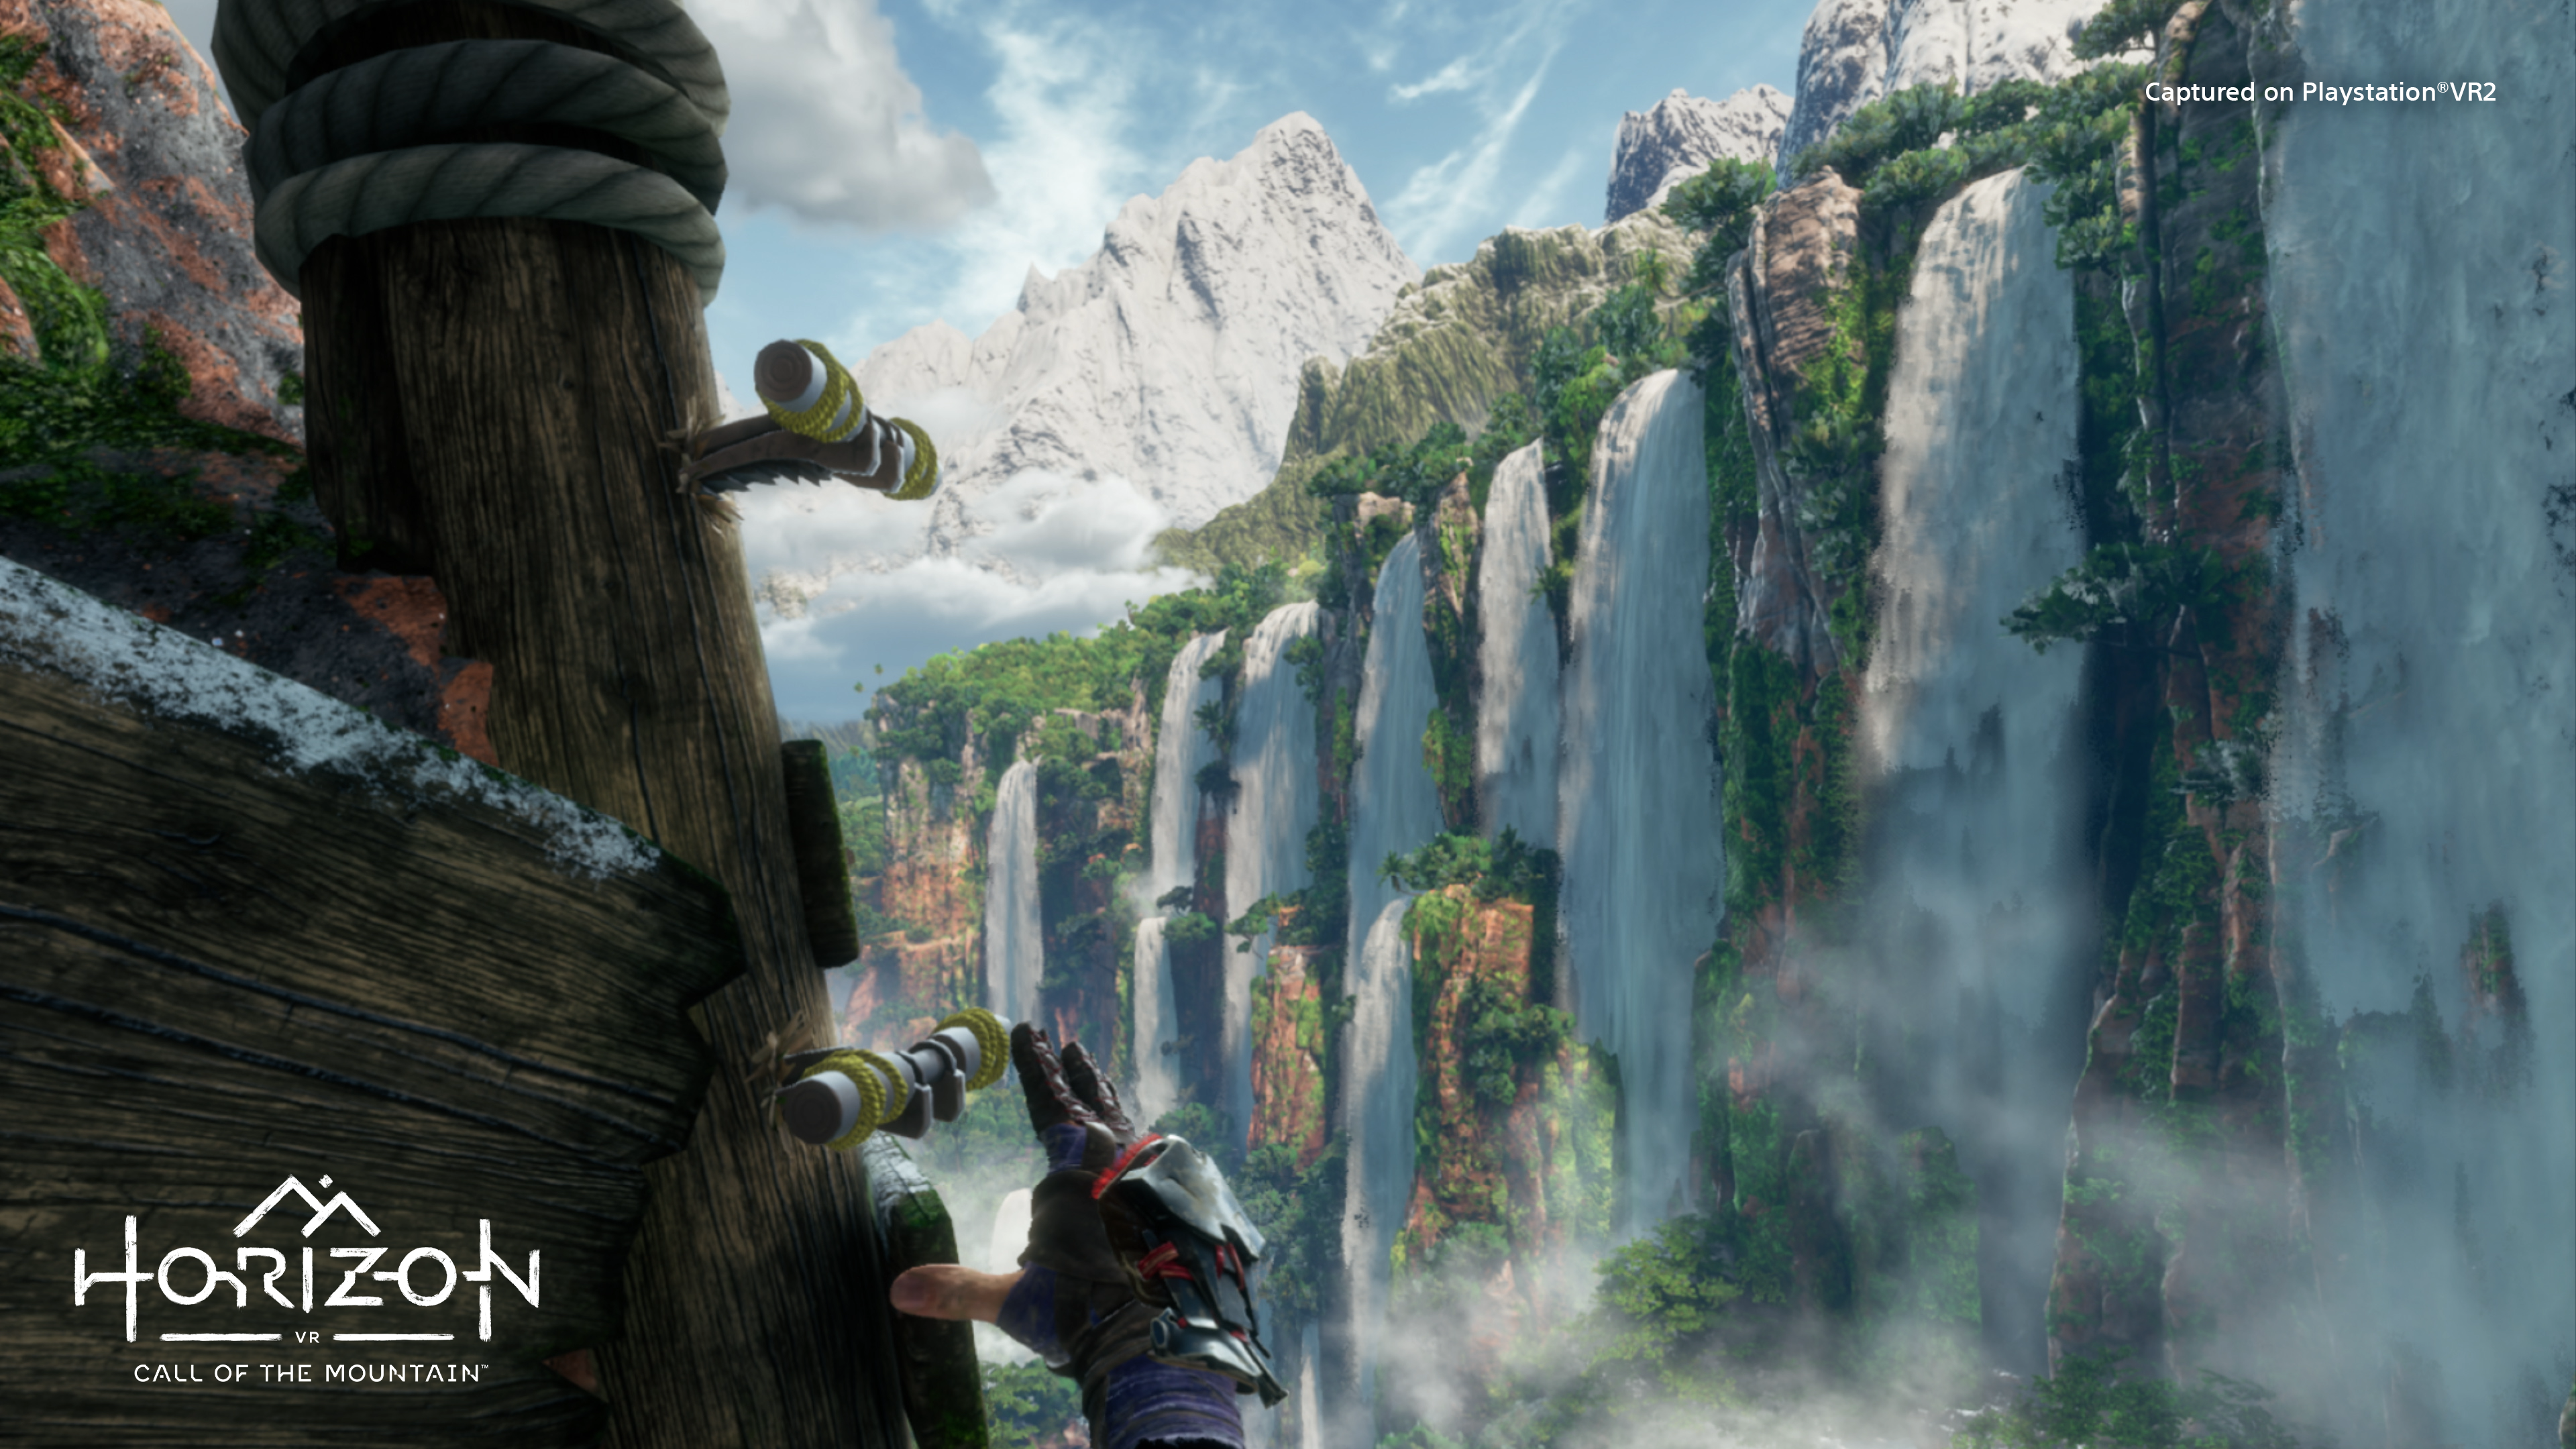 Ryas climbs a mountain overlooking a waterfall in Horizon Cal of the Mountain.